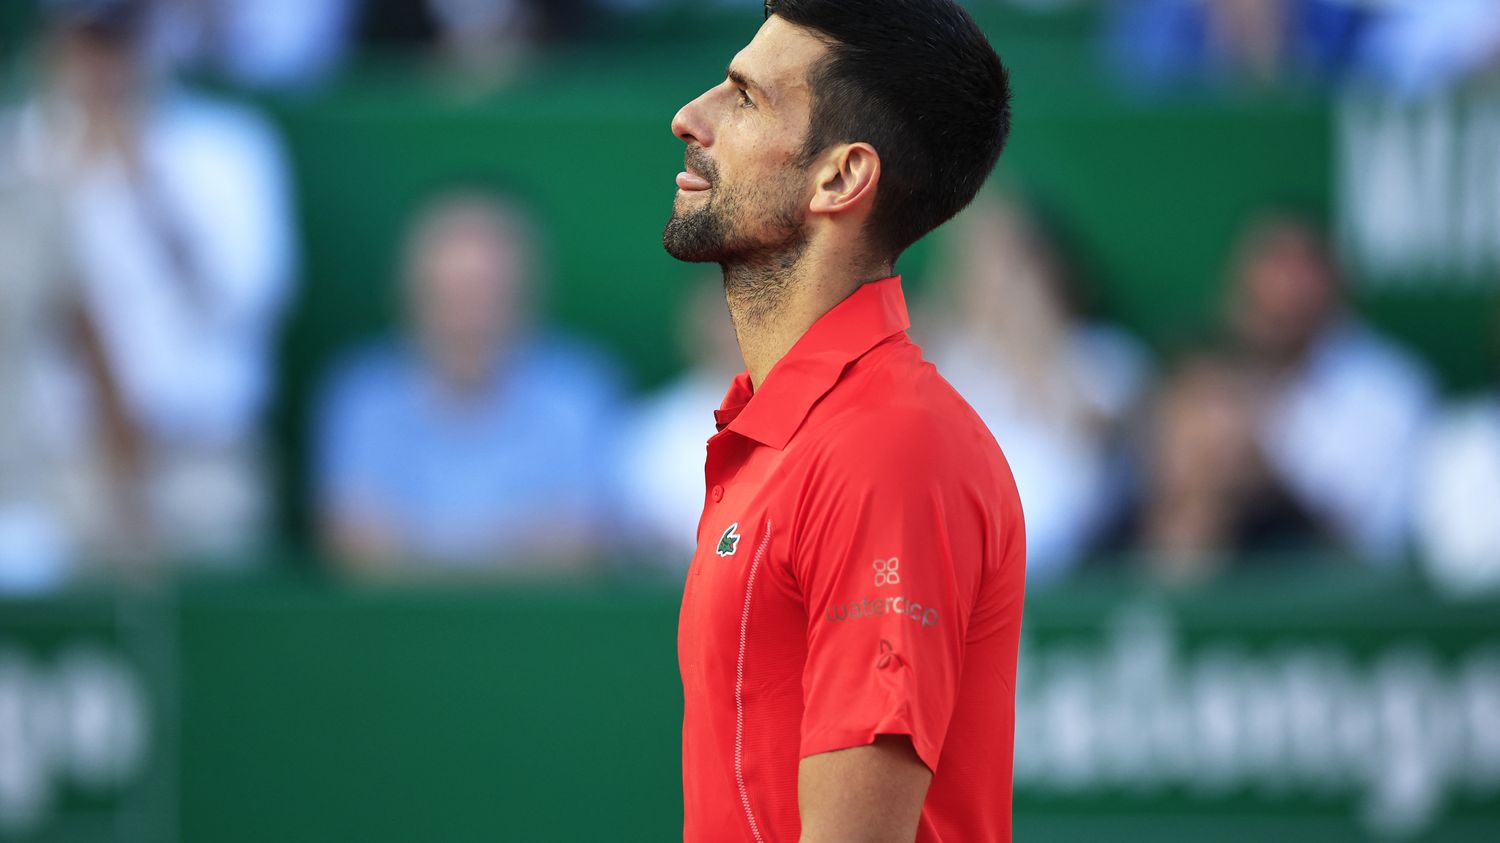 Monte-Carlo: World No. 1 Novak Djokovic is eliminated by Casper Ruud in the semi-finals